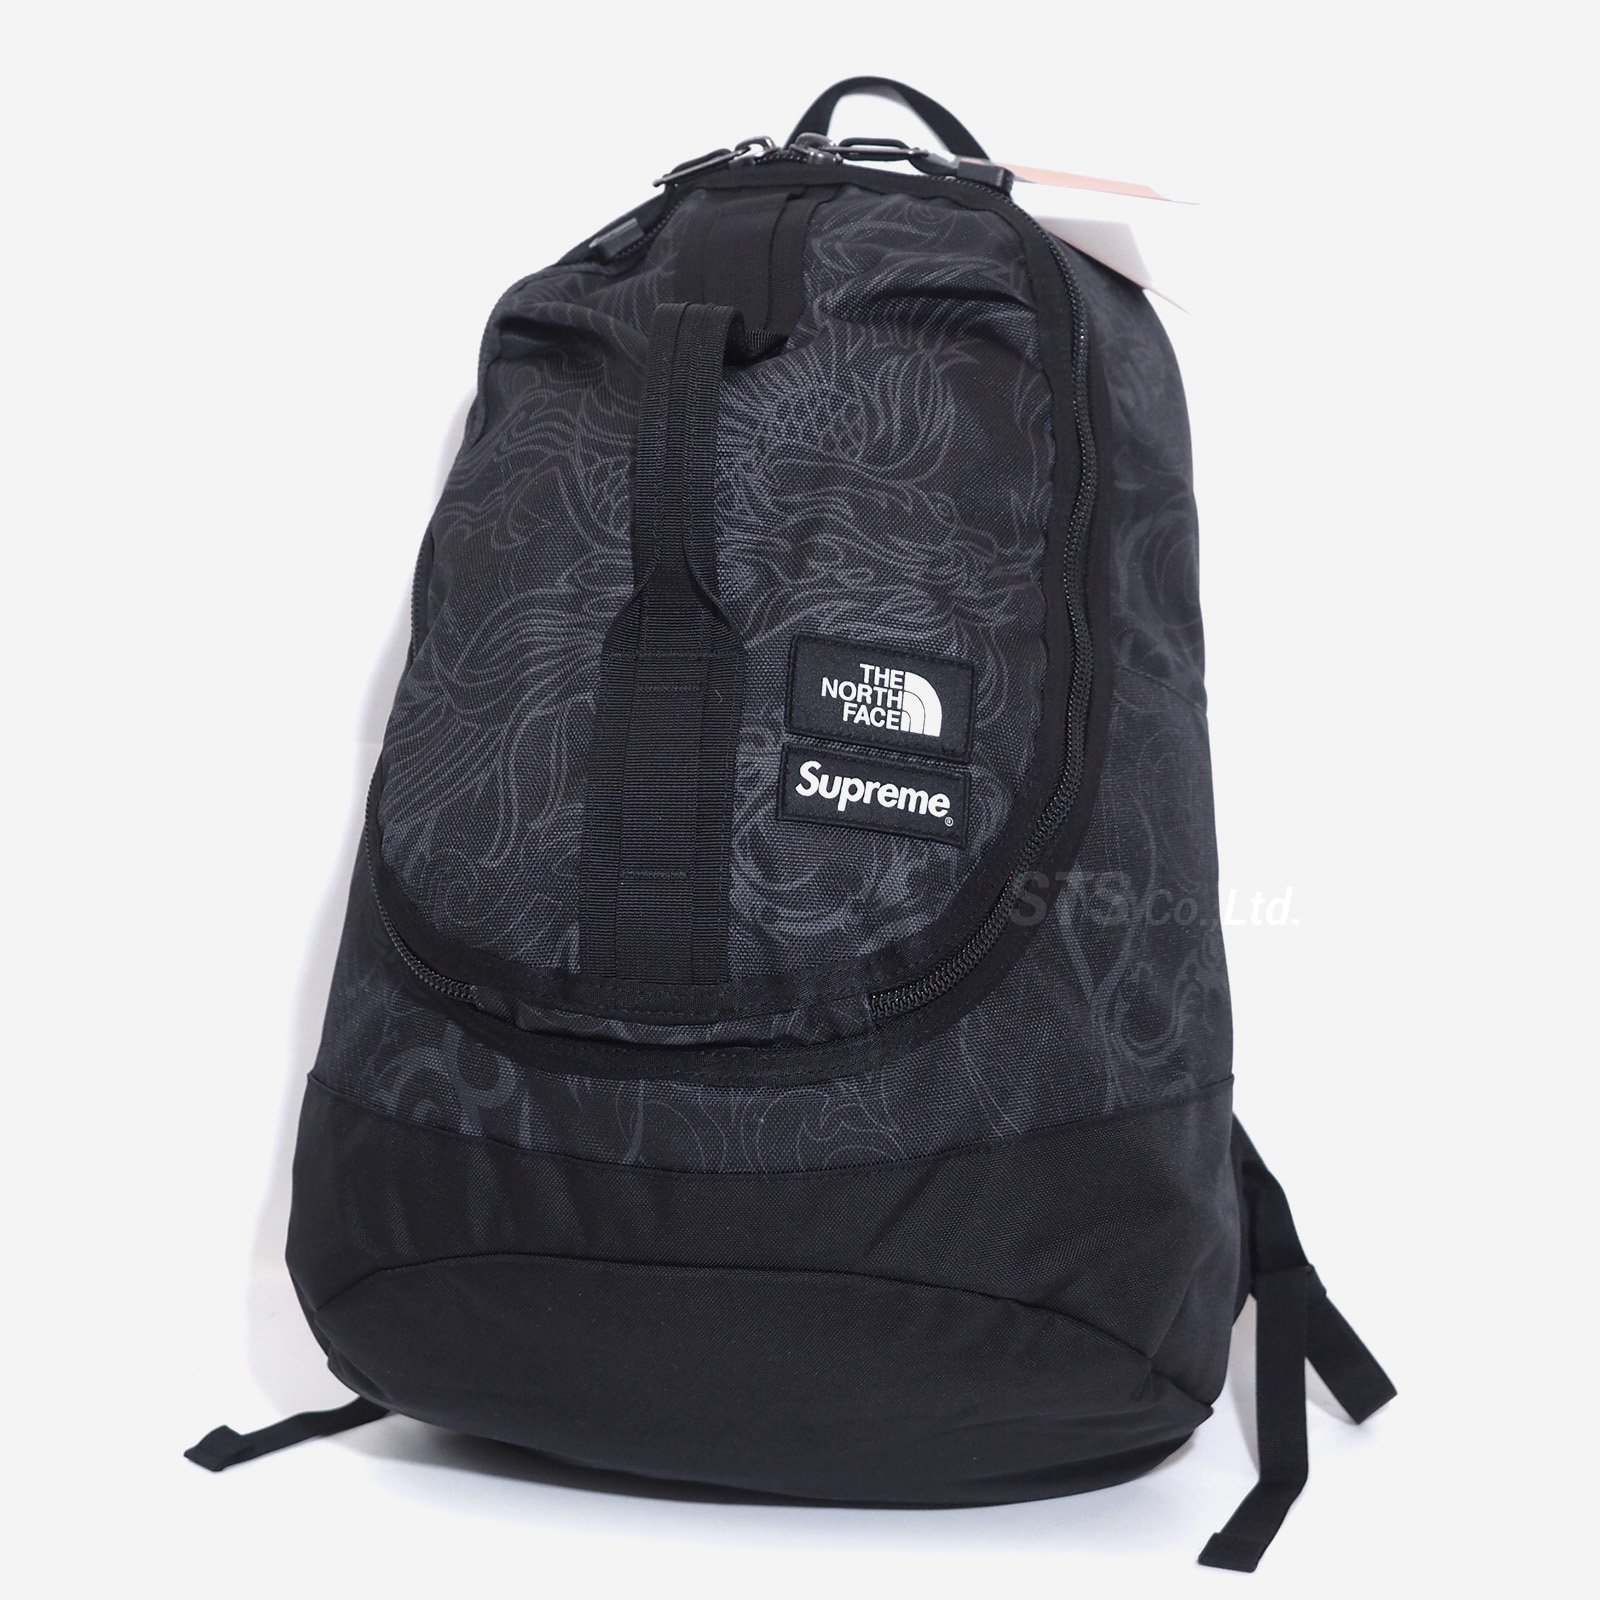 Supreme backpack steep tech約30cm